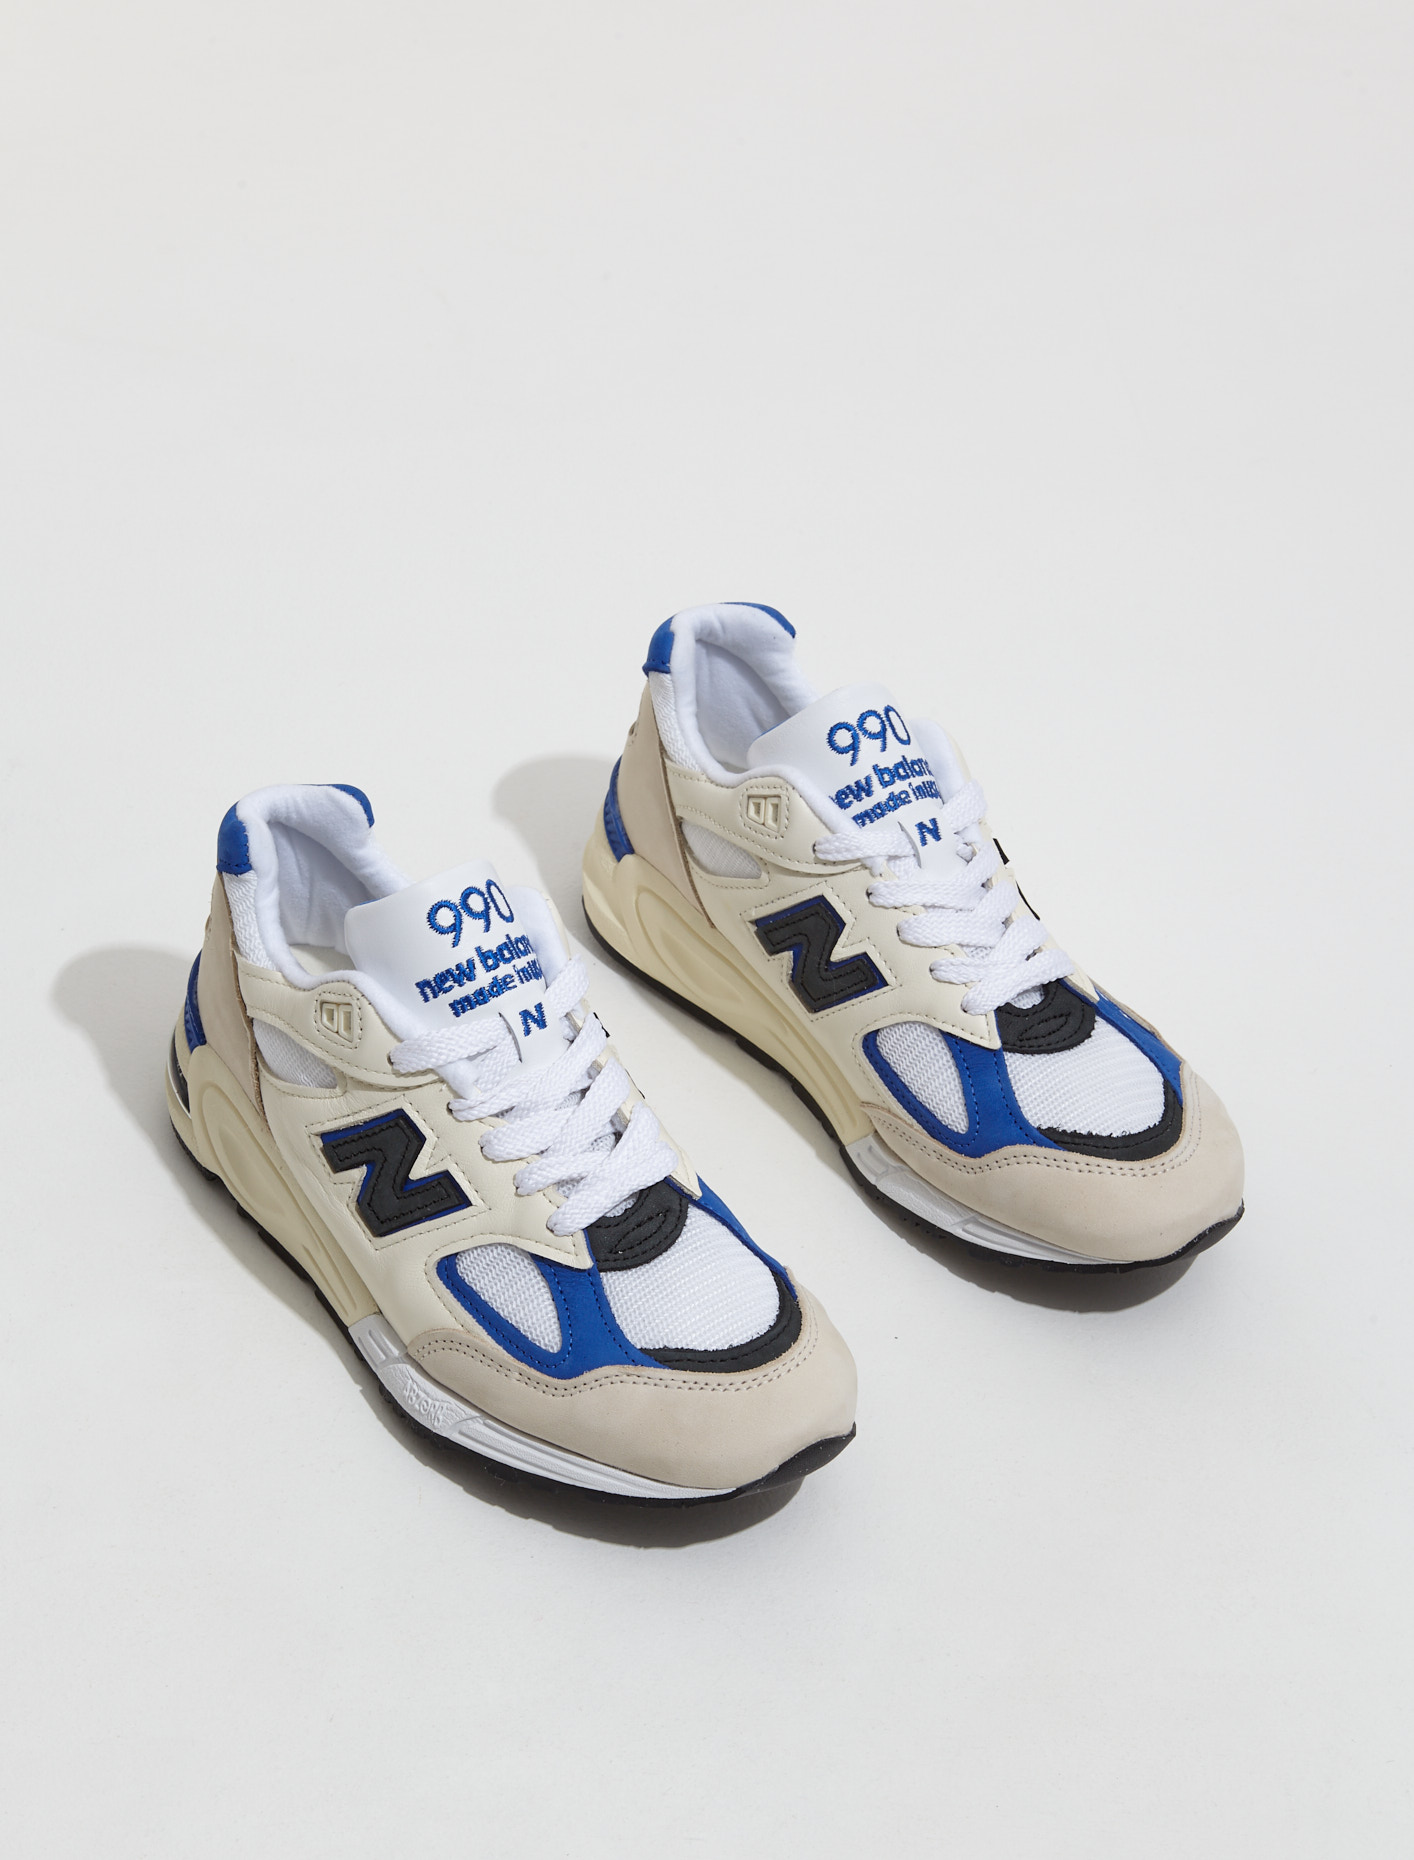 New Balance 990 v2 'MiUSA by Teddy Santis' Sneaker in White | Voo Store